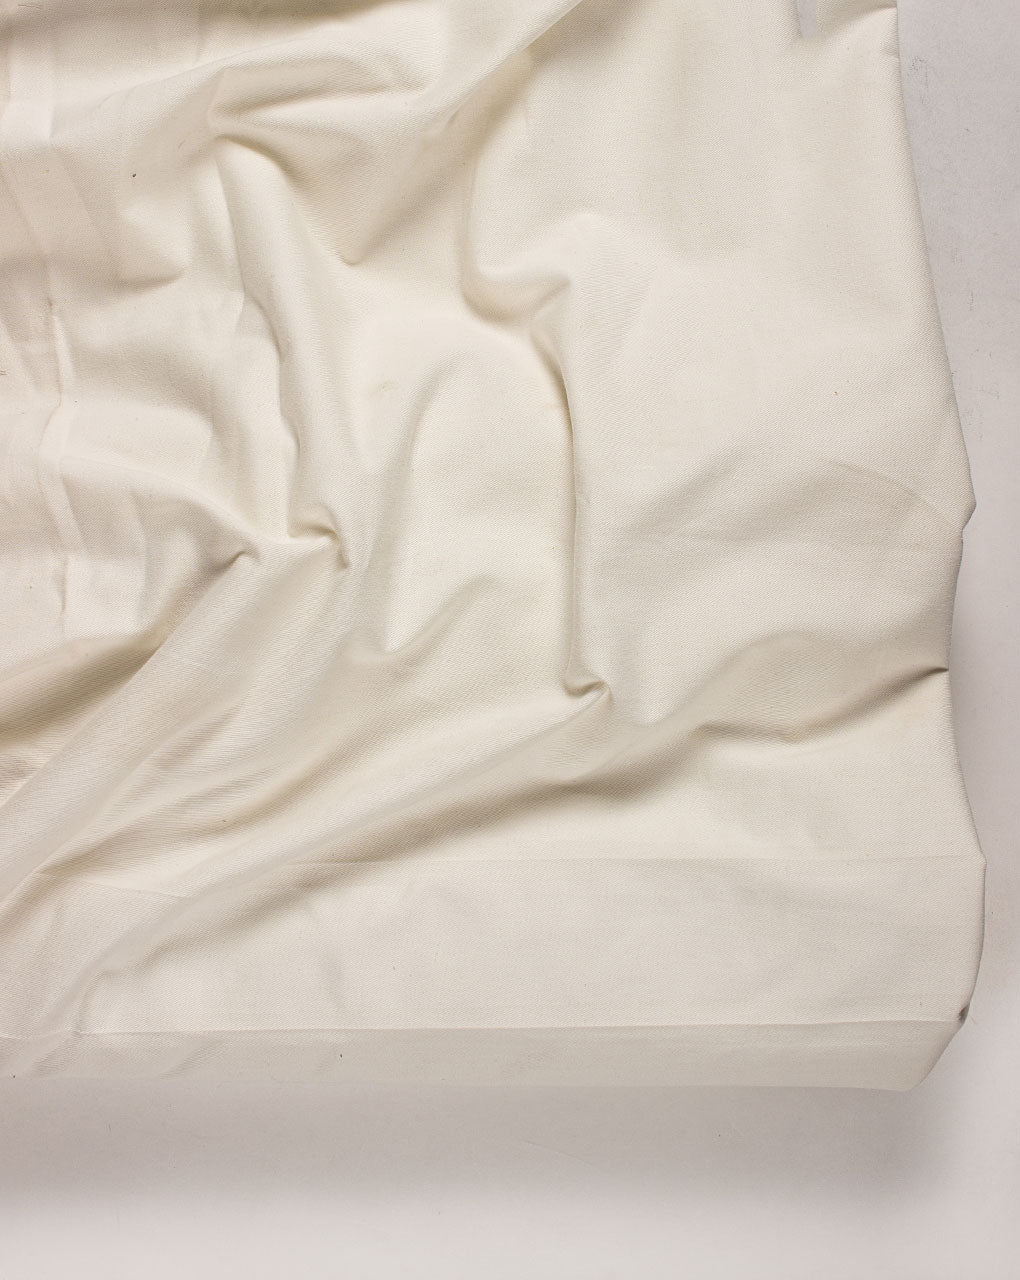 16s x 12s (108 x 56) Cotton Twill Fabric